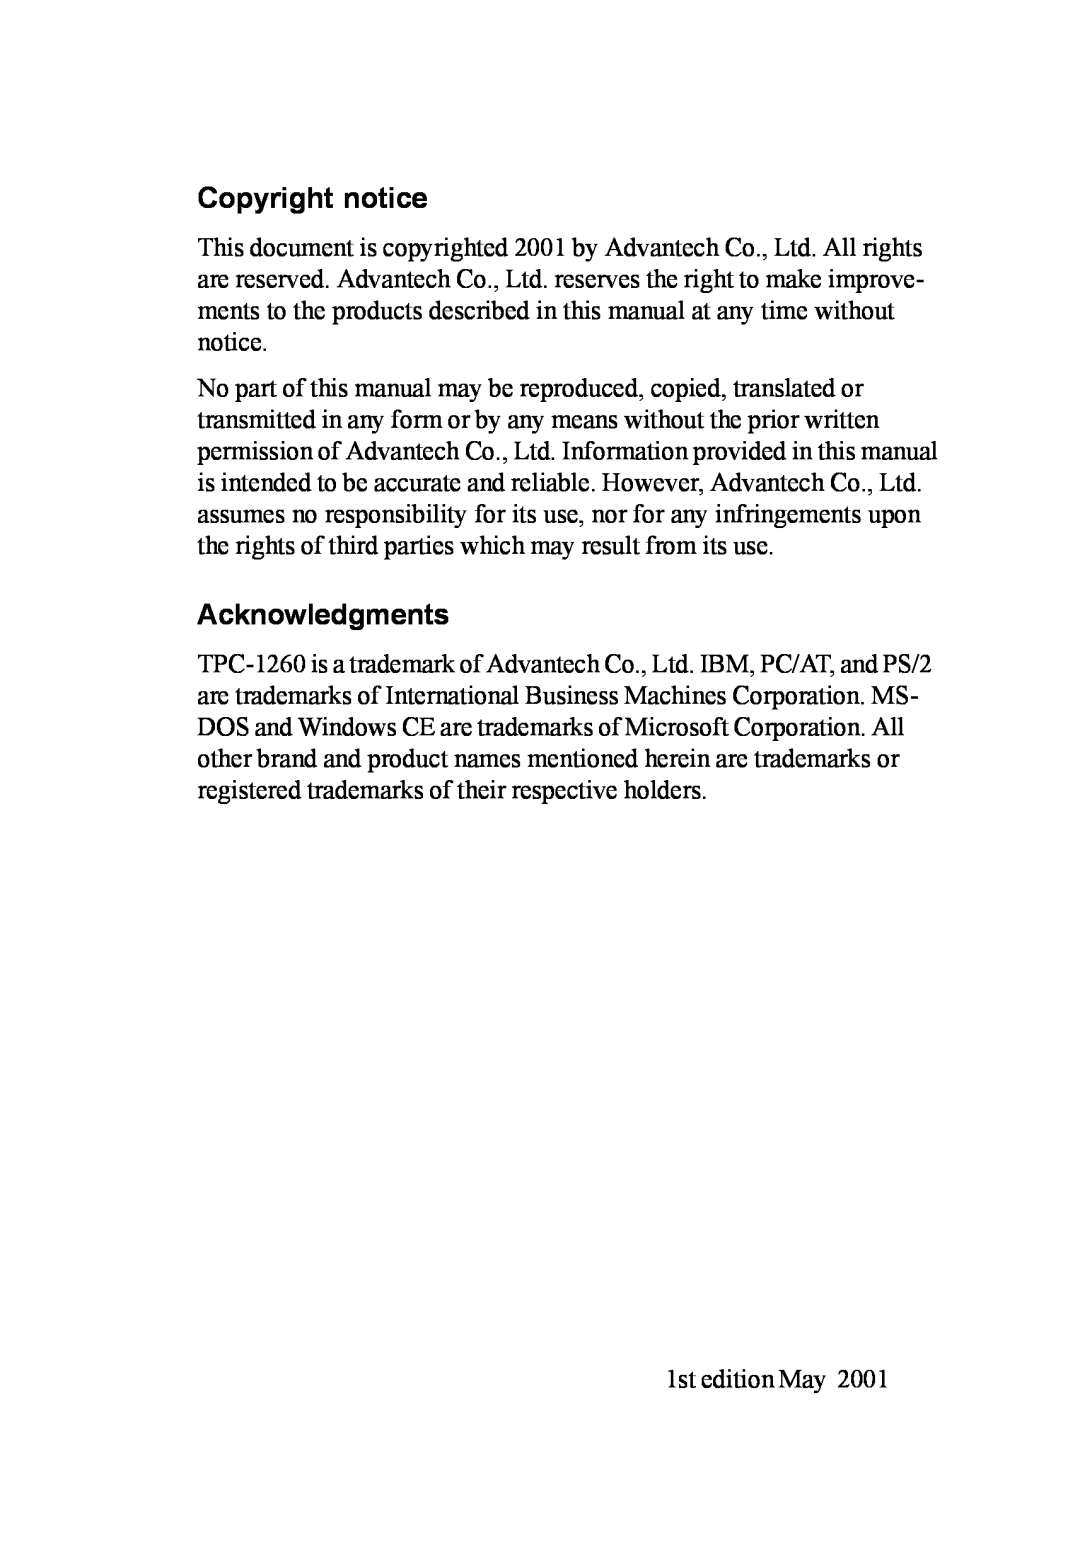 Advantech TPC-1260 manual Copyright notice, Acknowledgments, 1st edition May 